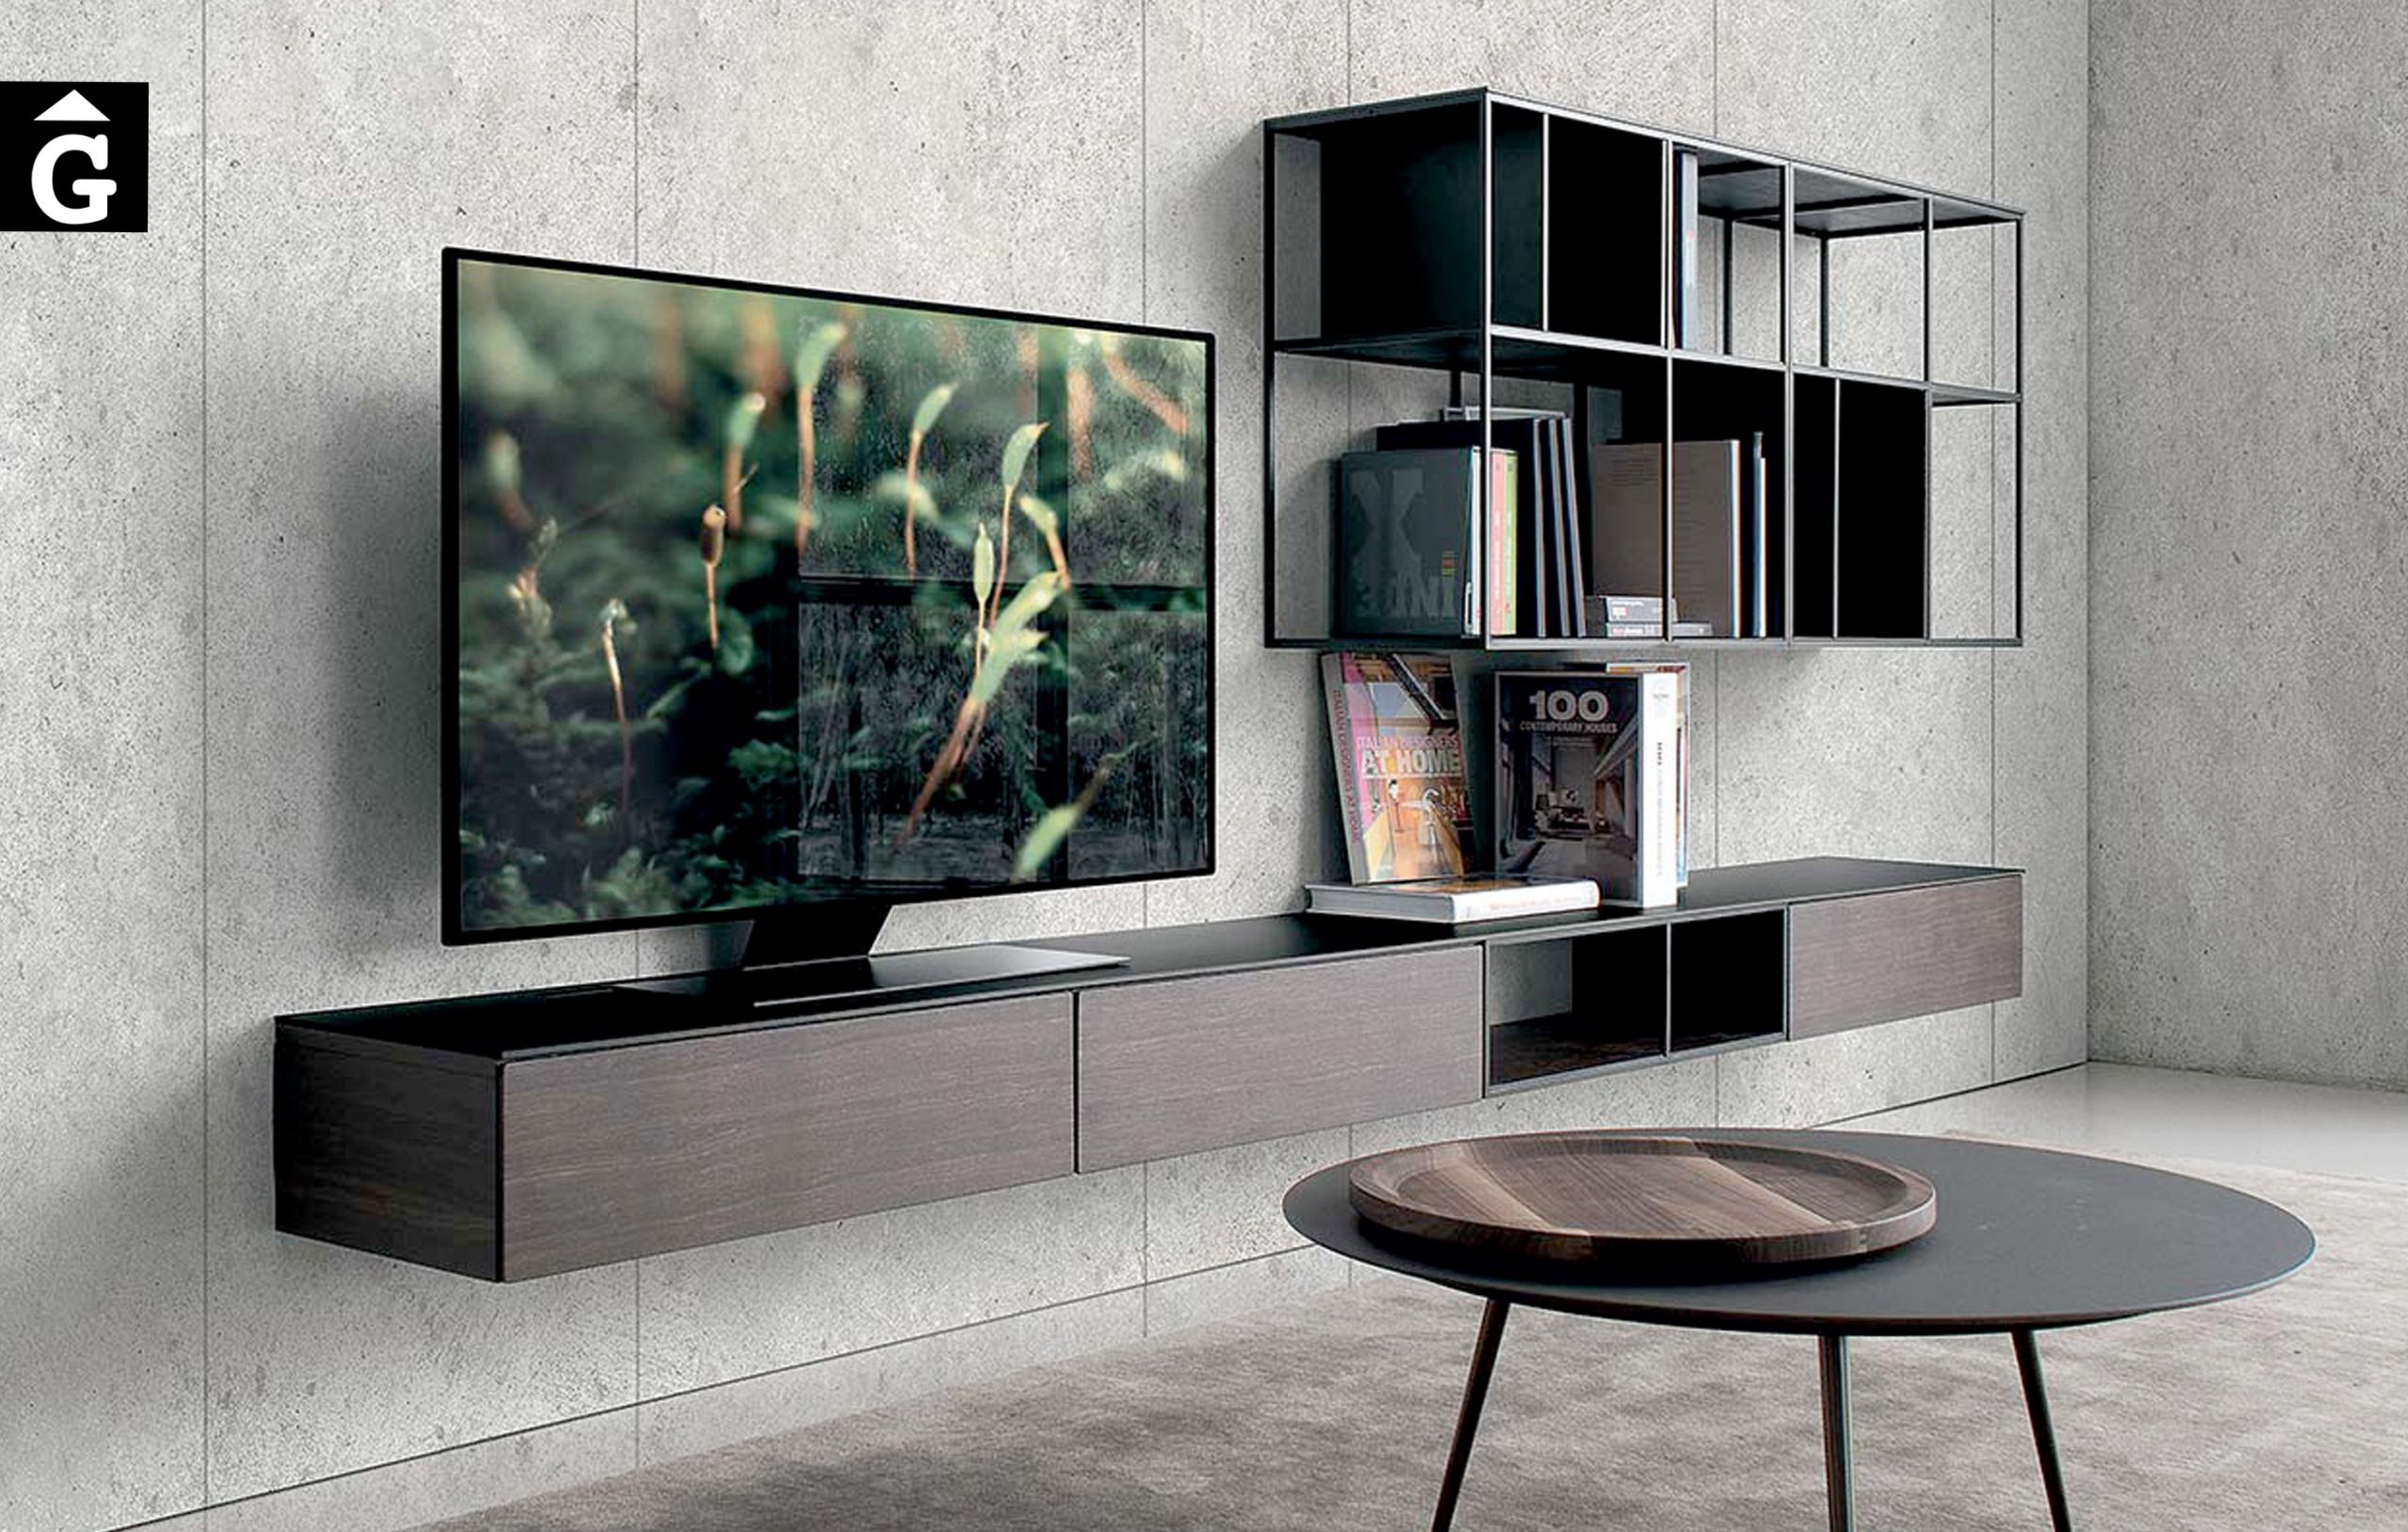 Moble Tv Atelier AT06 minimalista metall i fustaExtendo Design Source by mobles Gifreu botiga elements interiors